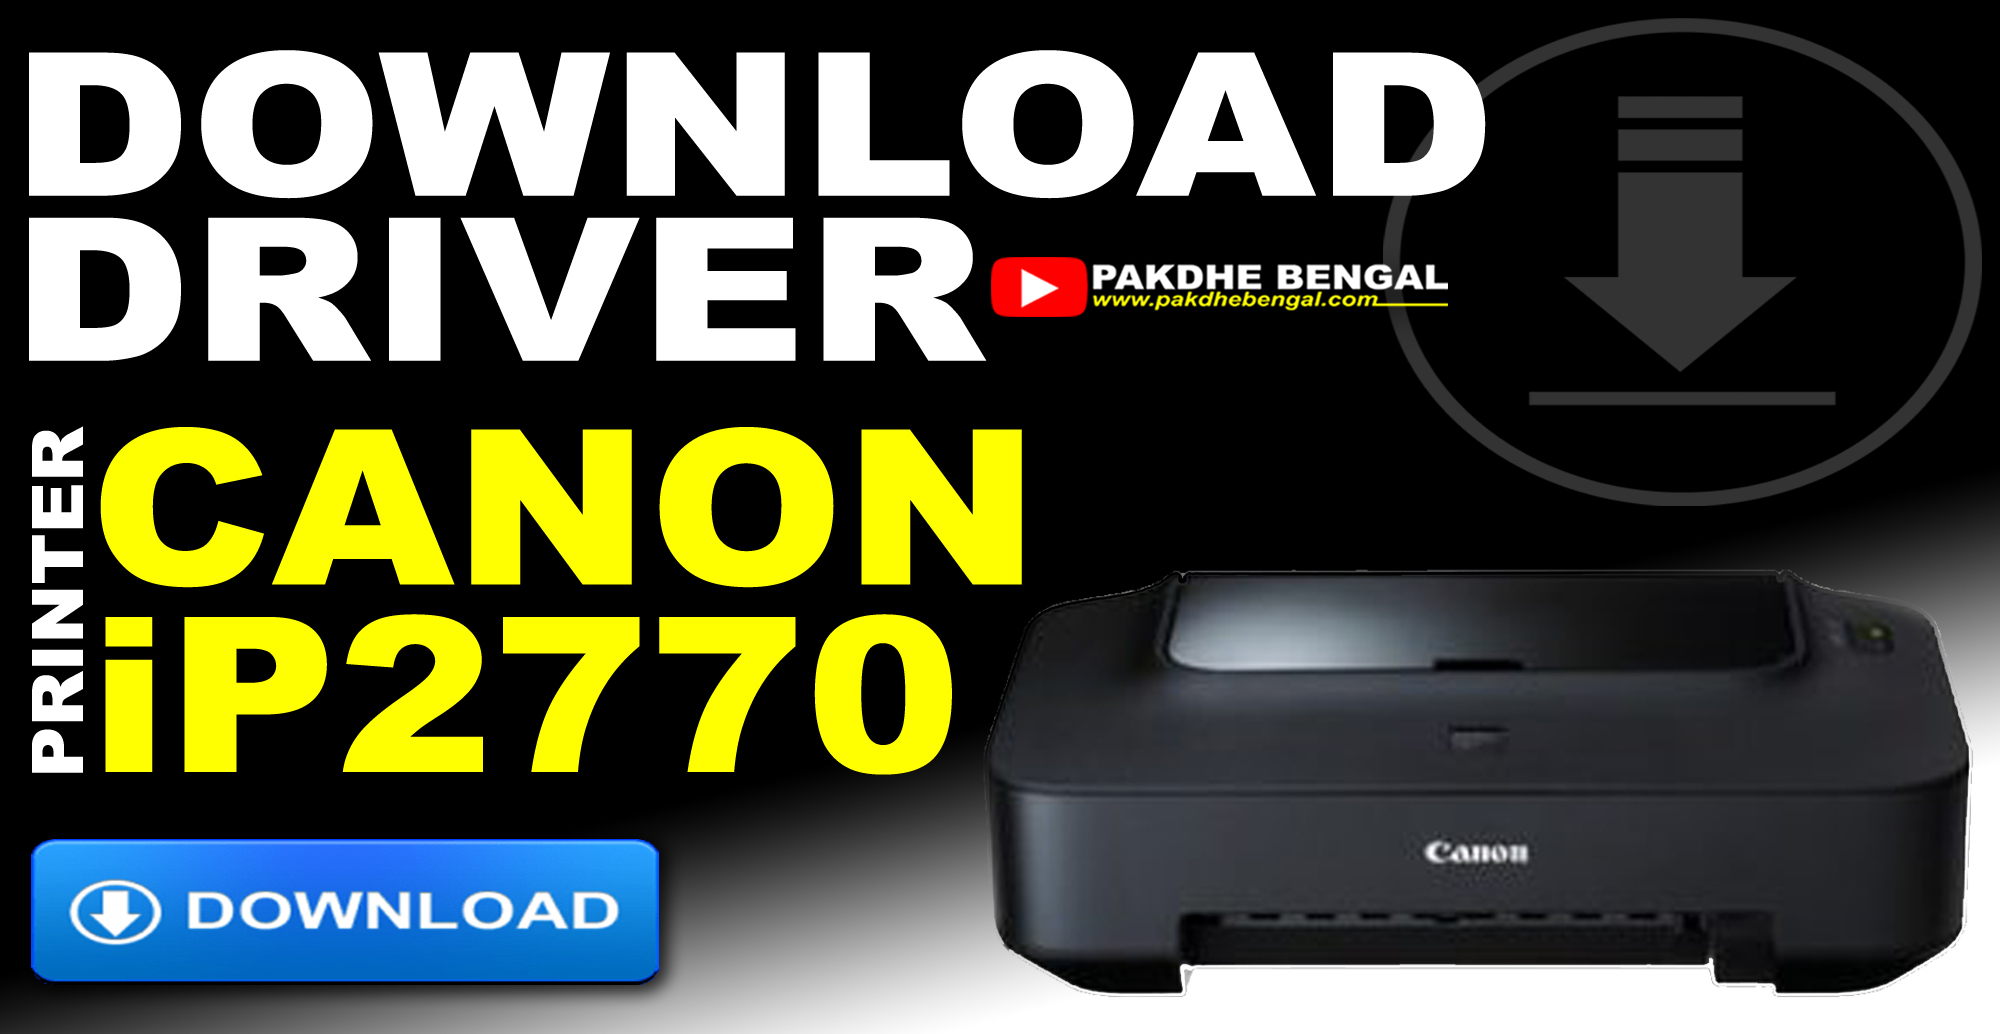 Download master printer canon ip2770